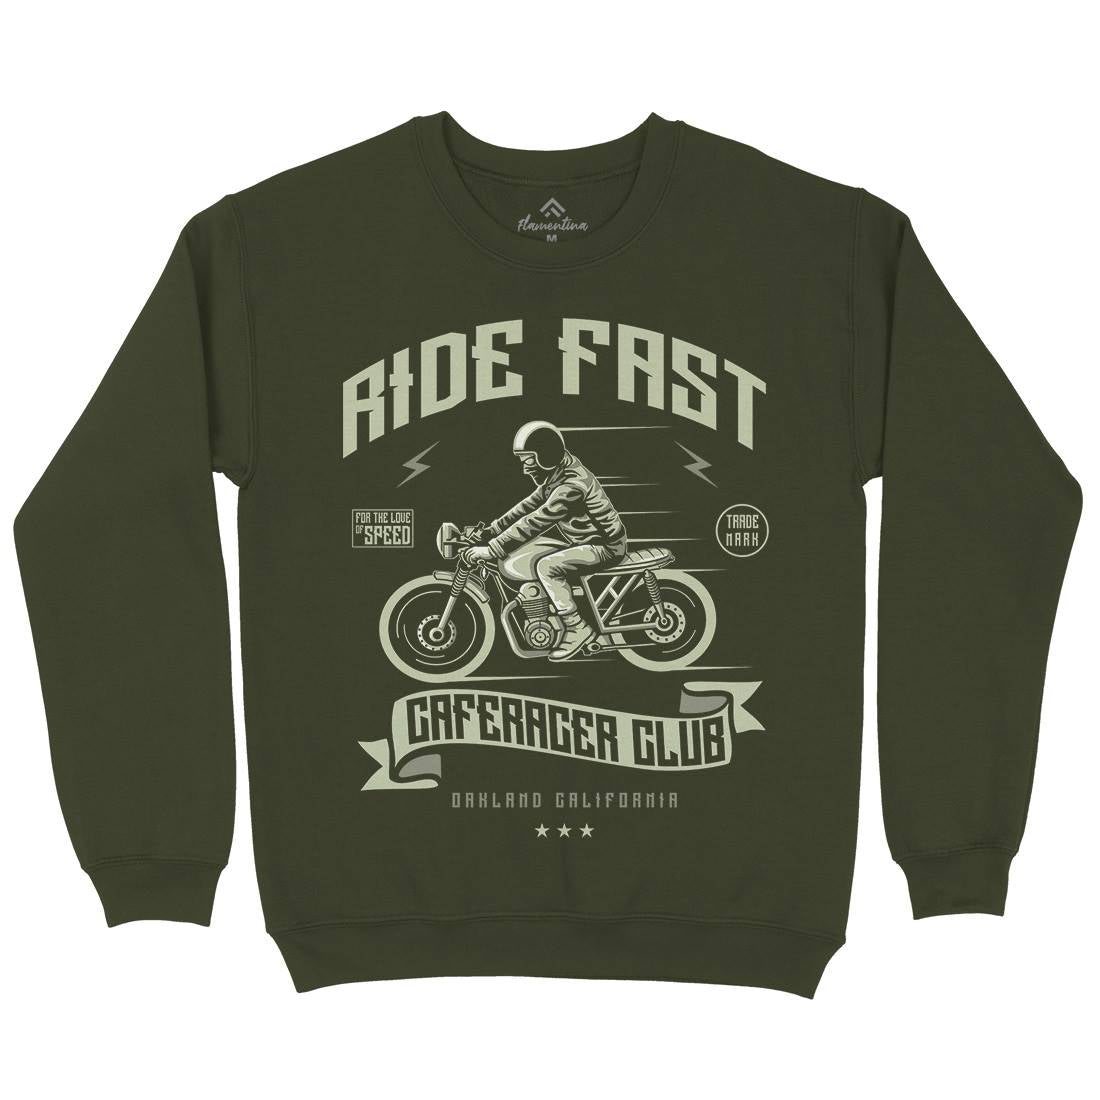 Ride Fast Mens Crew Neck Sweatshirt Motorcycles A117